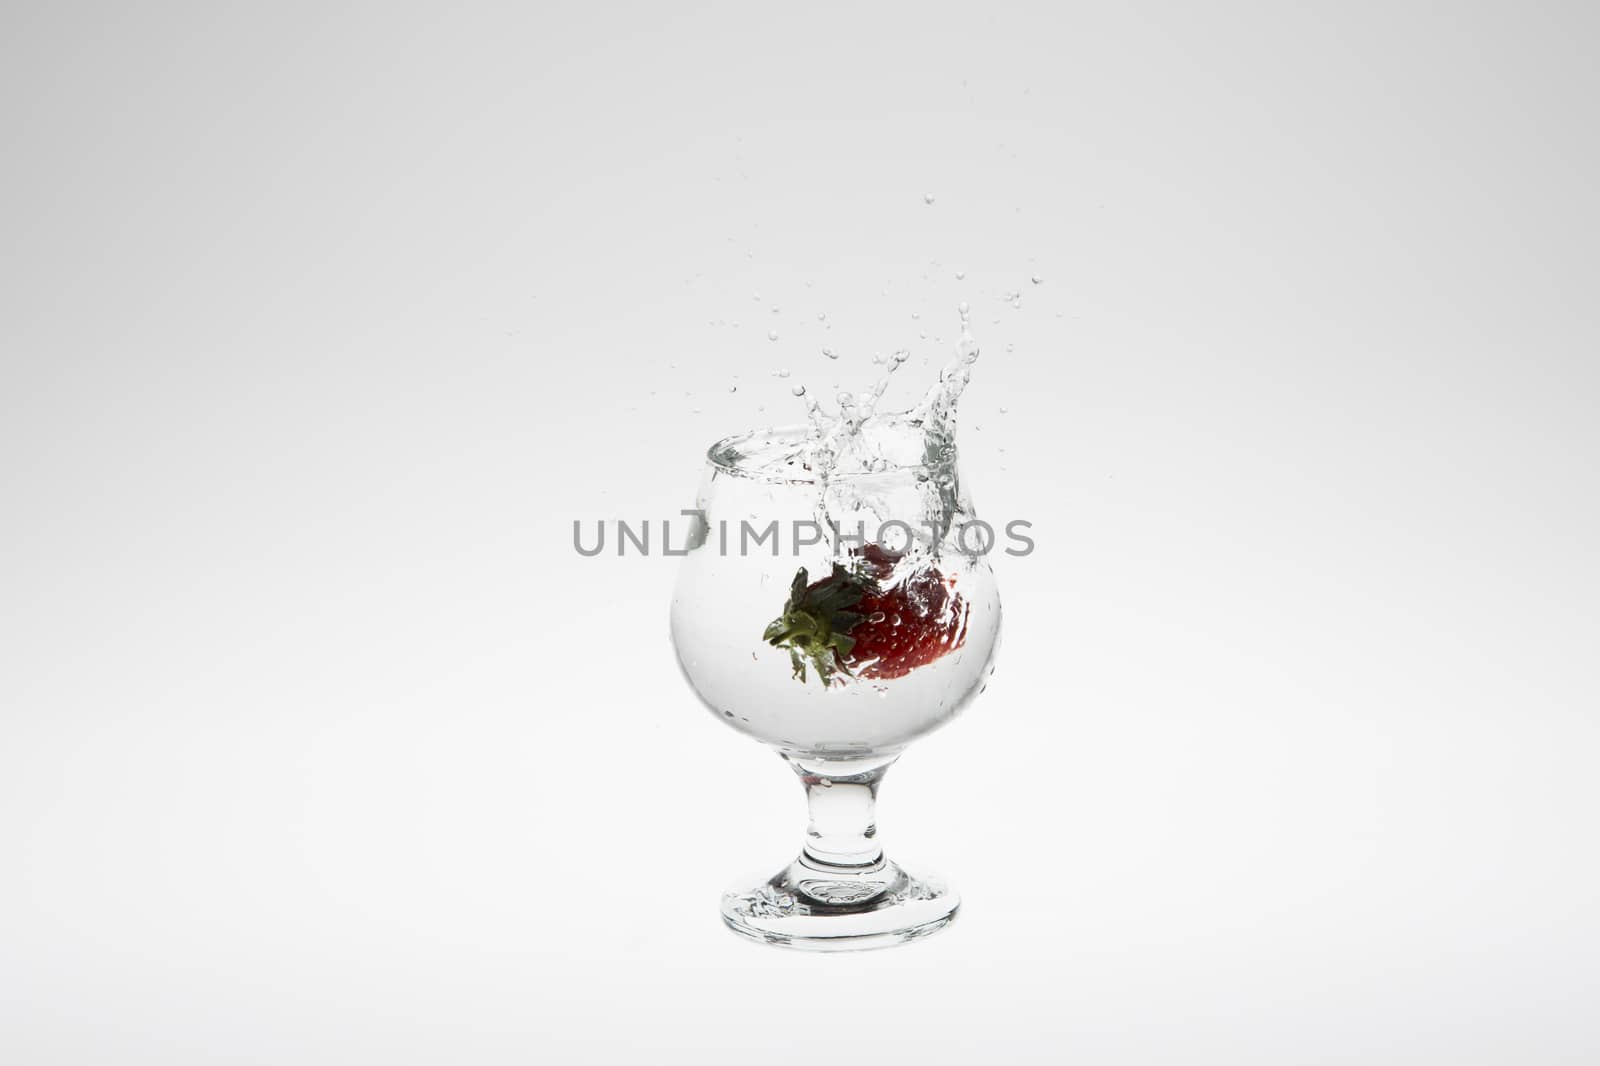 strawberry in the water splash by Chattranusorn09